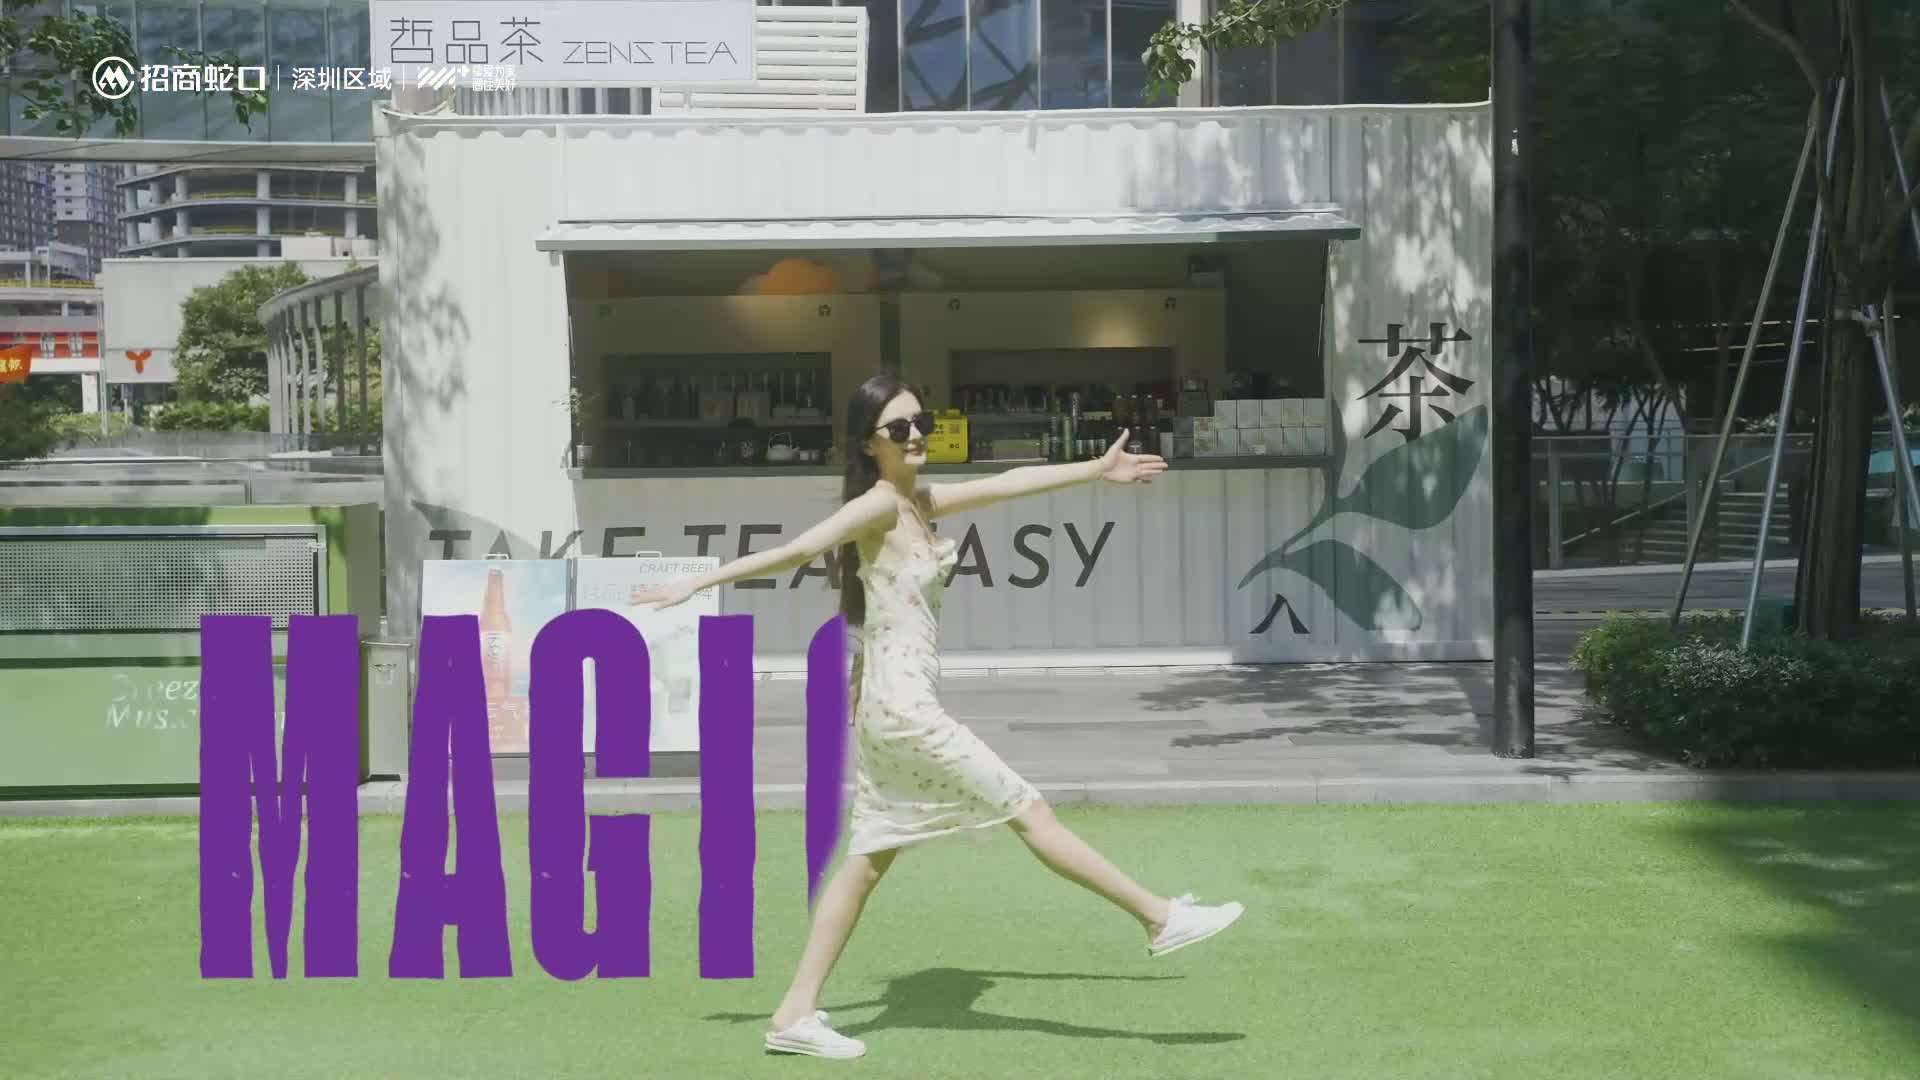 citywalk 深圳·前海 创意城市宣传